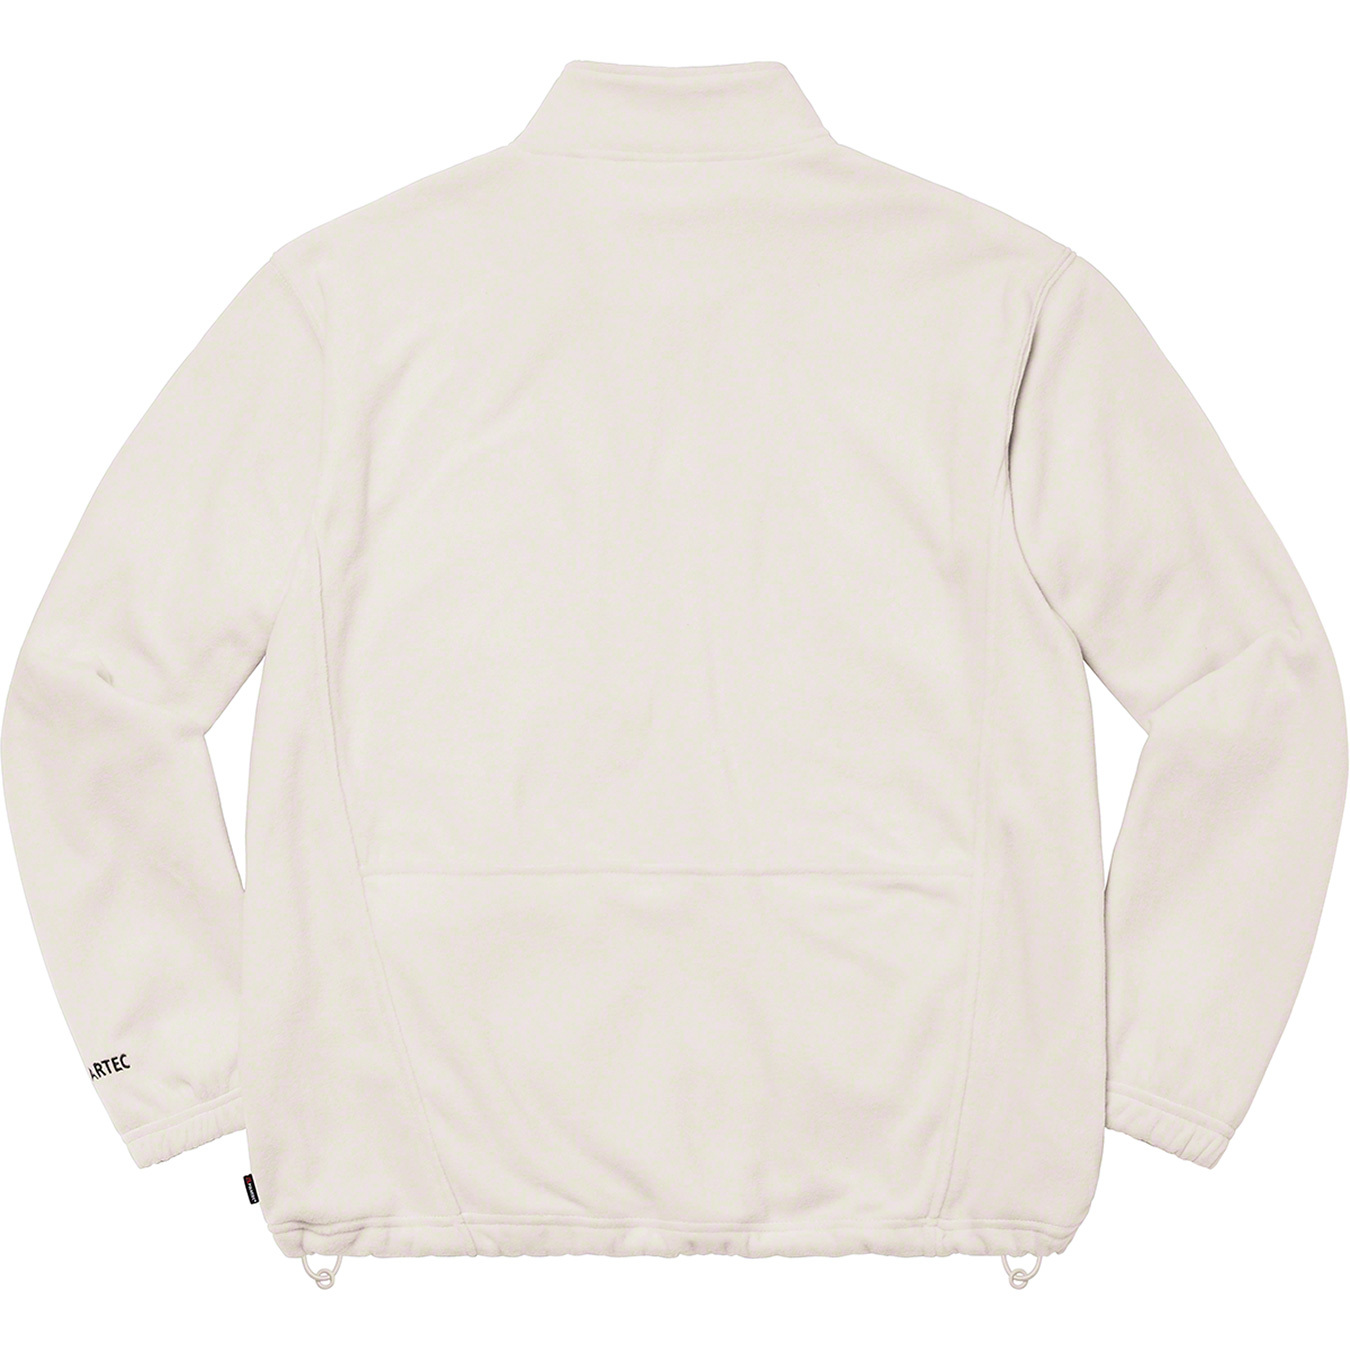 Polartec® Zip Jacket | Supreme 22fw